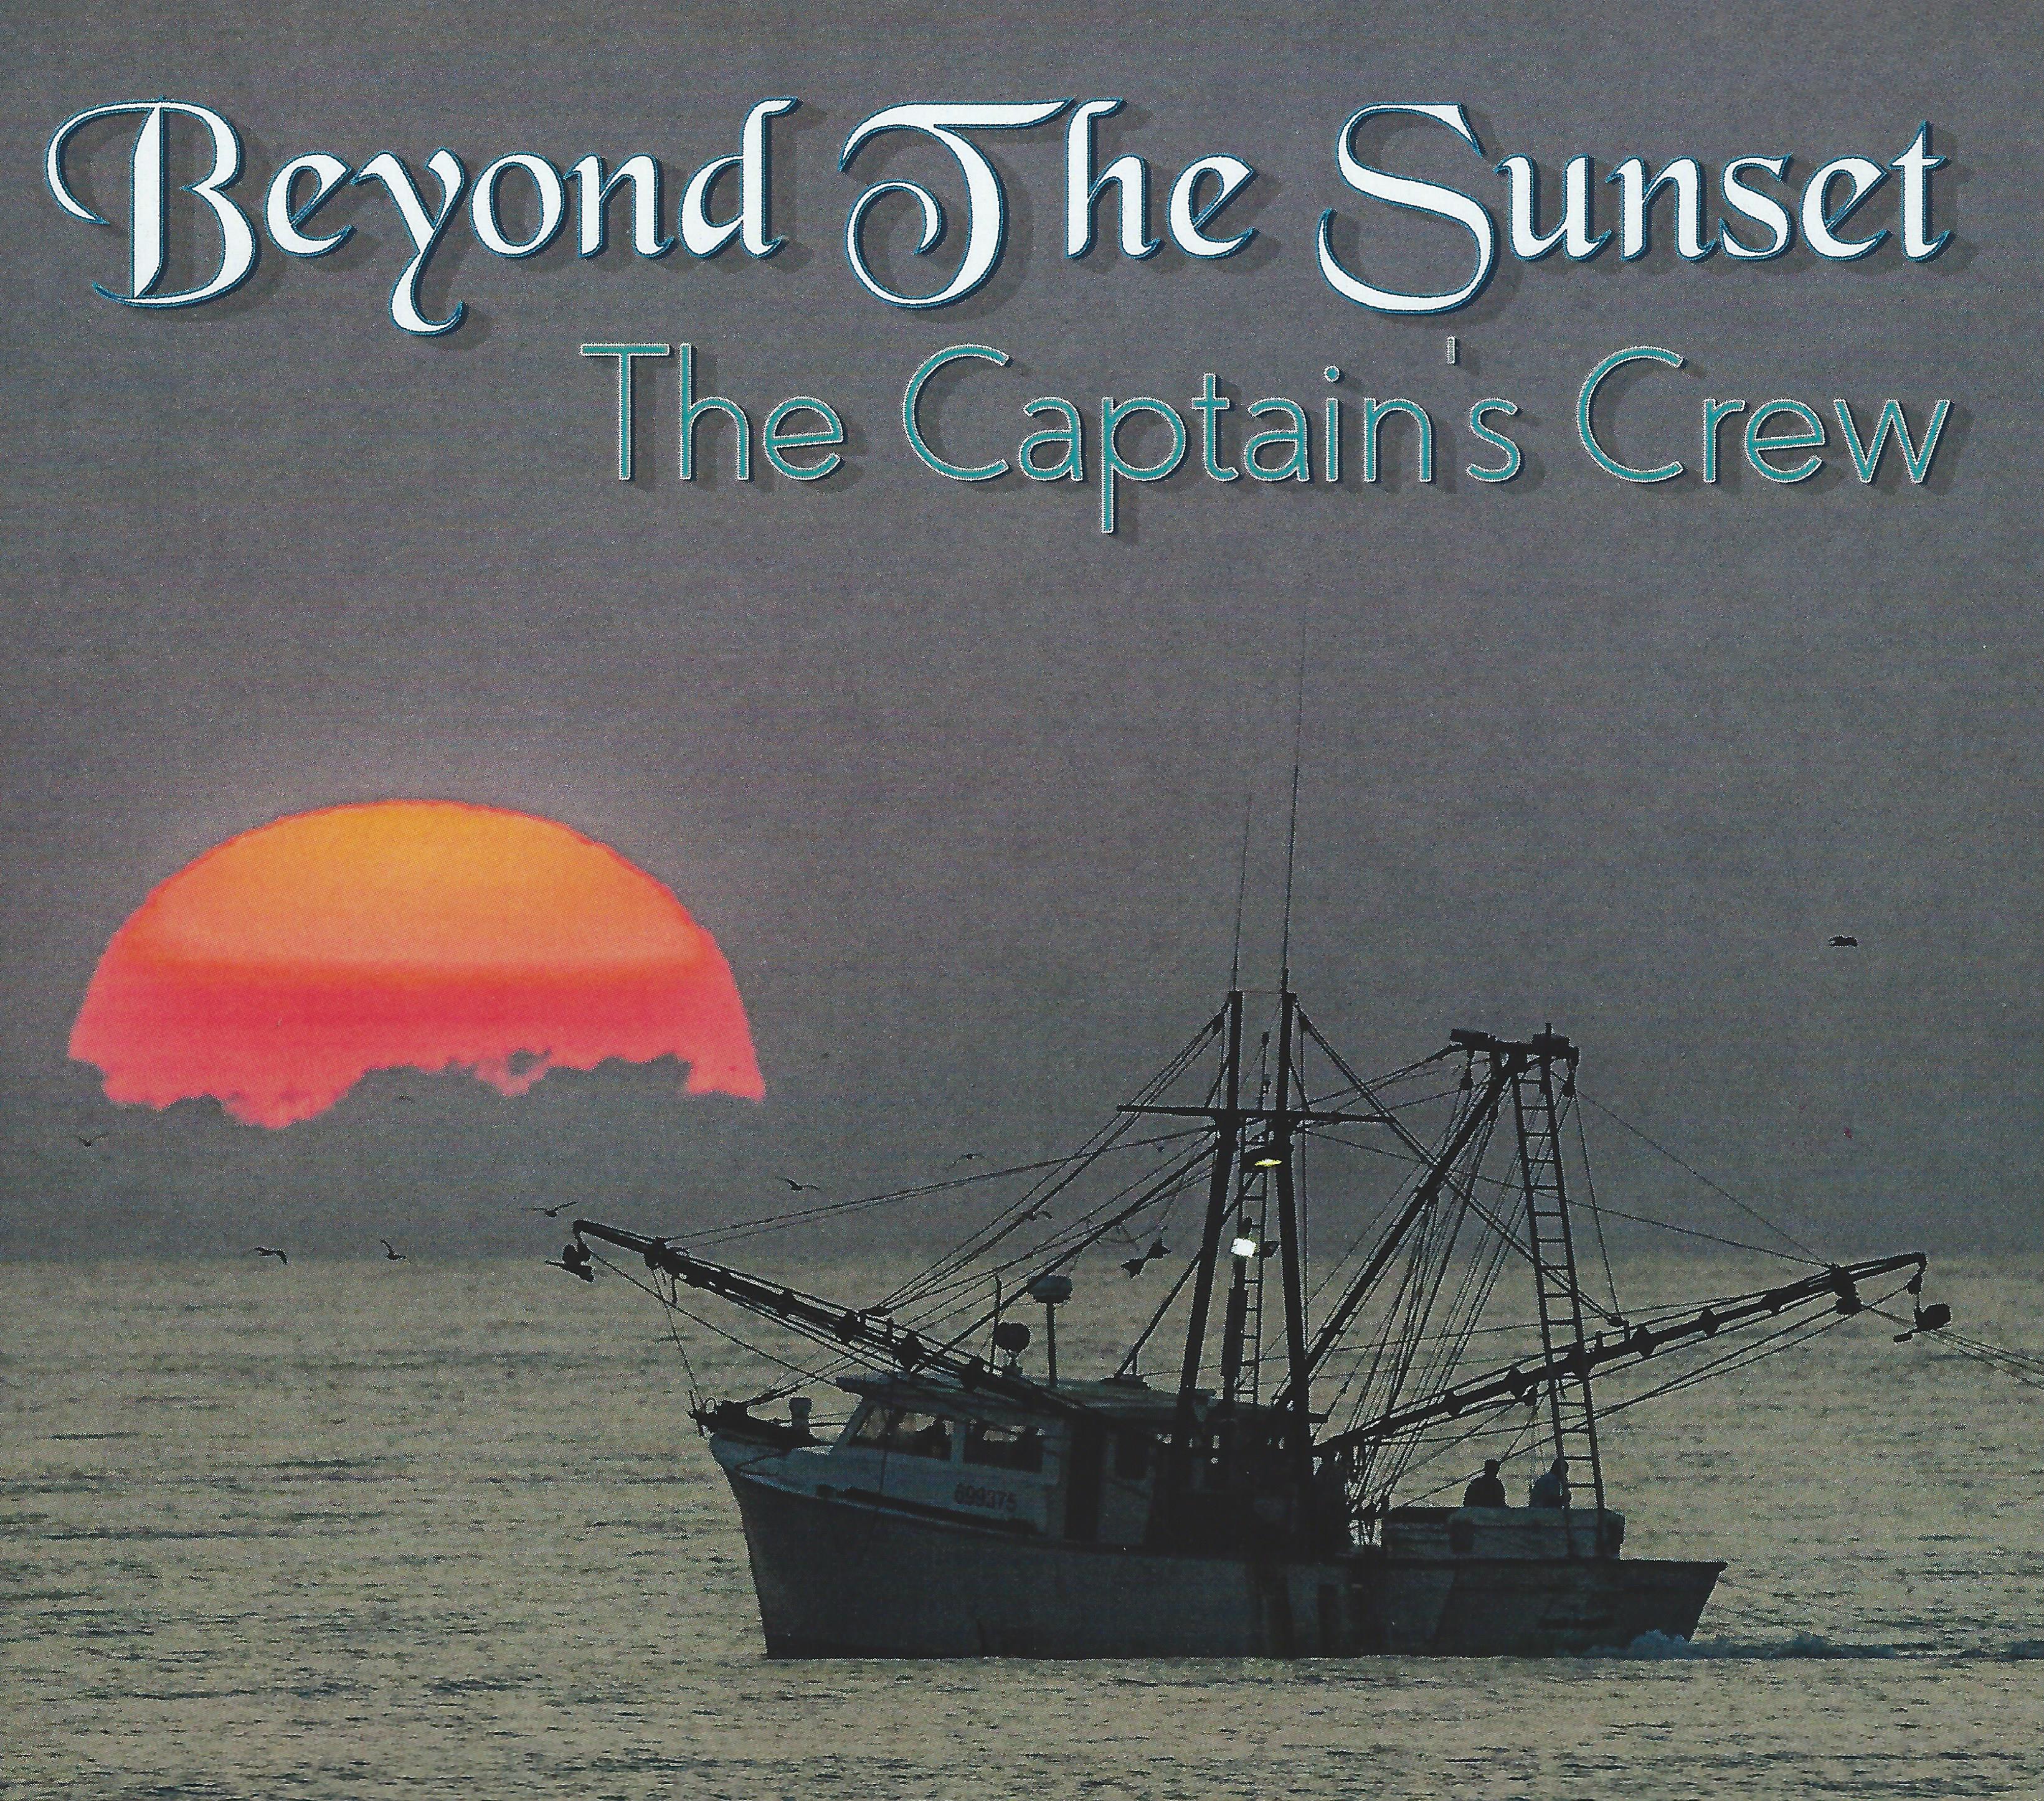 The Captainâ€™s Crew Releases New CD